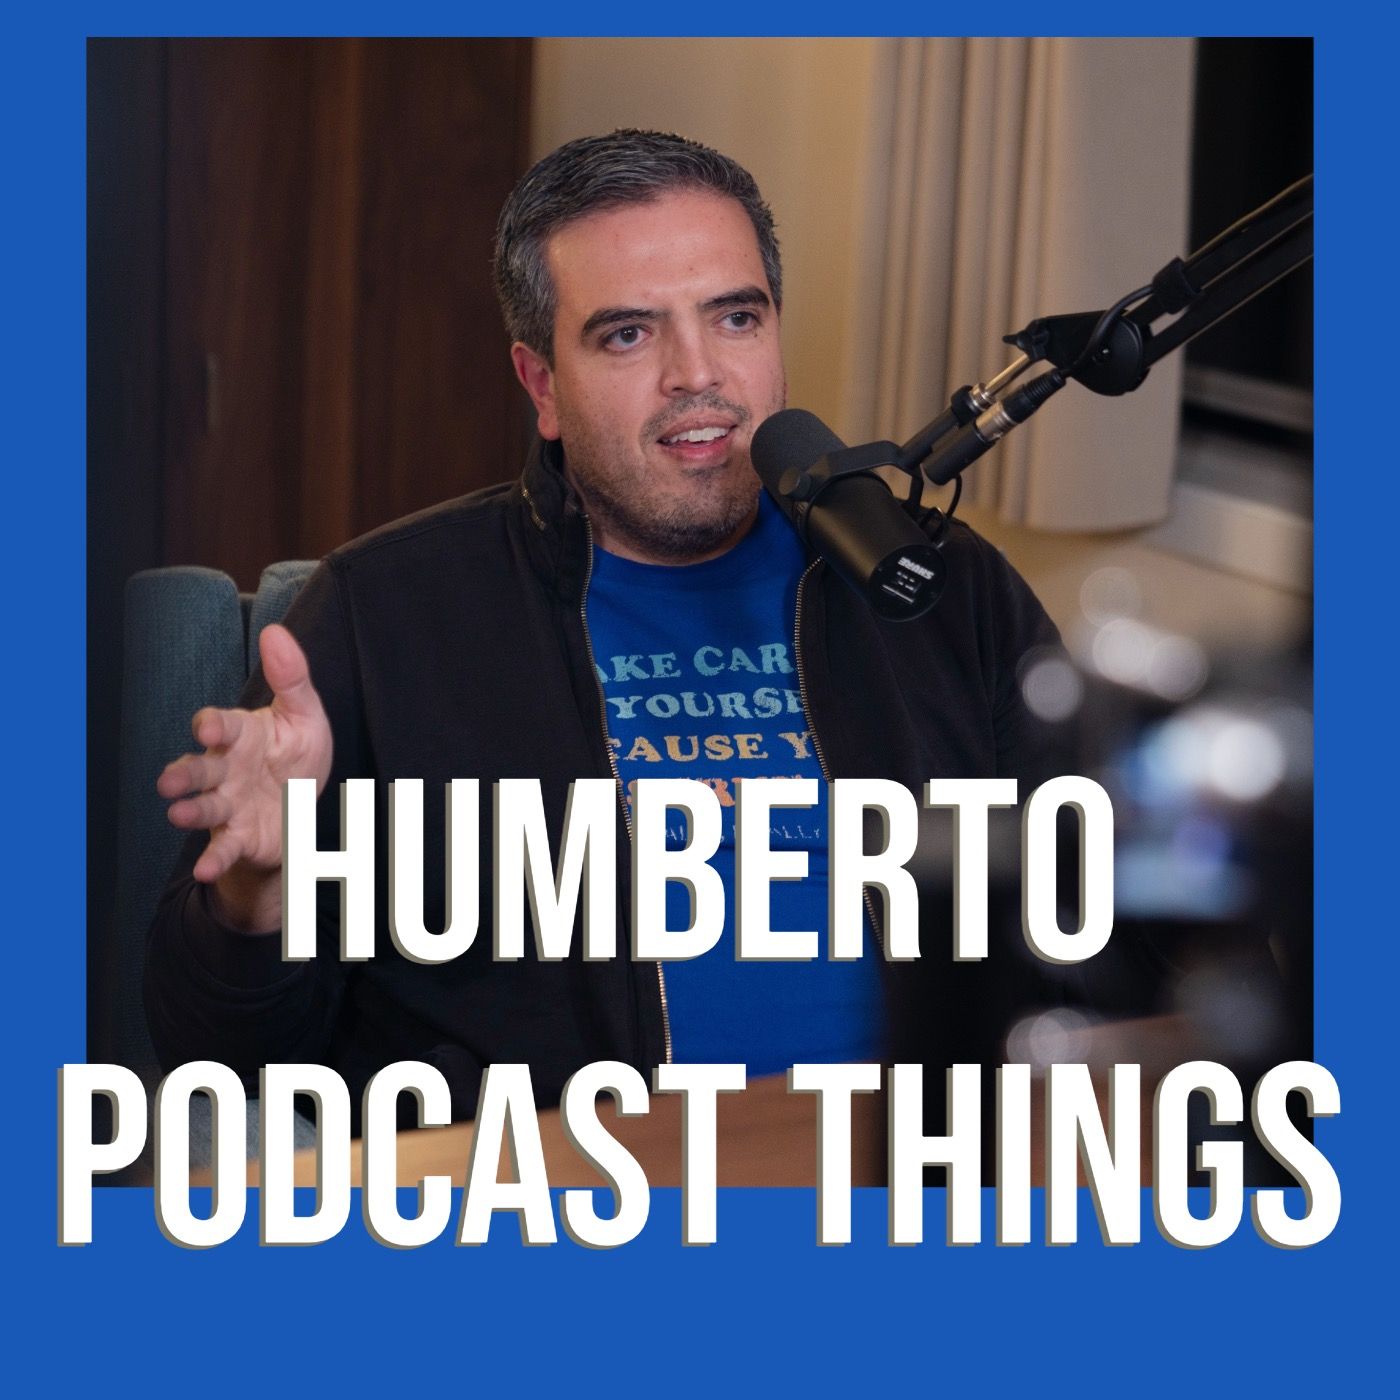 Humberto Podcast Things